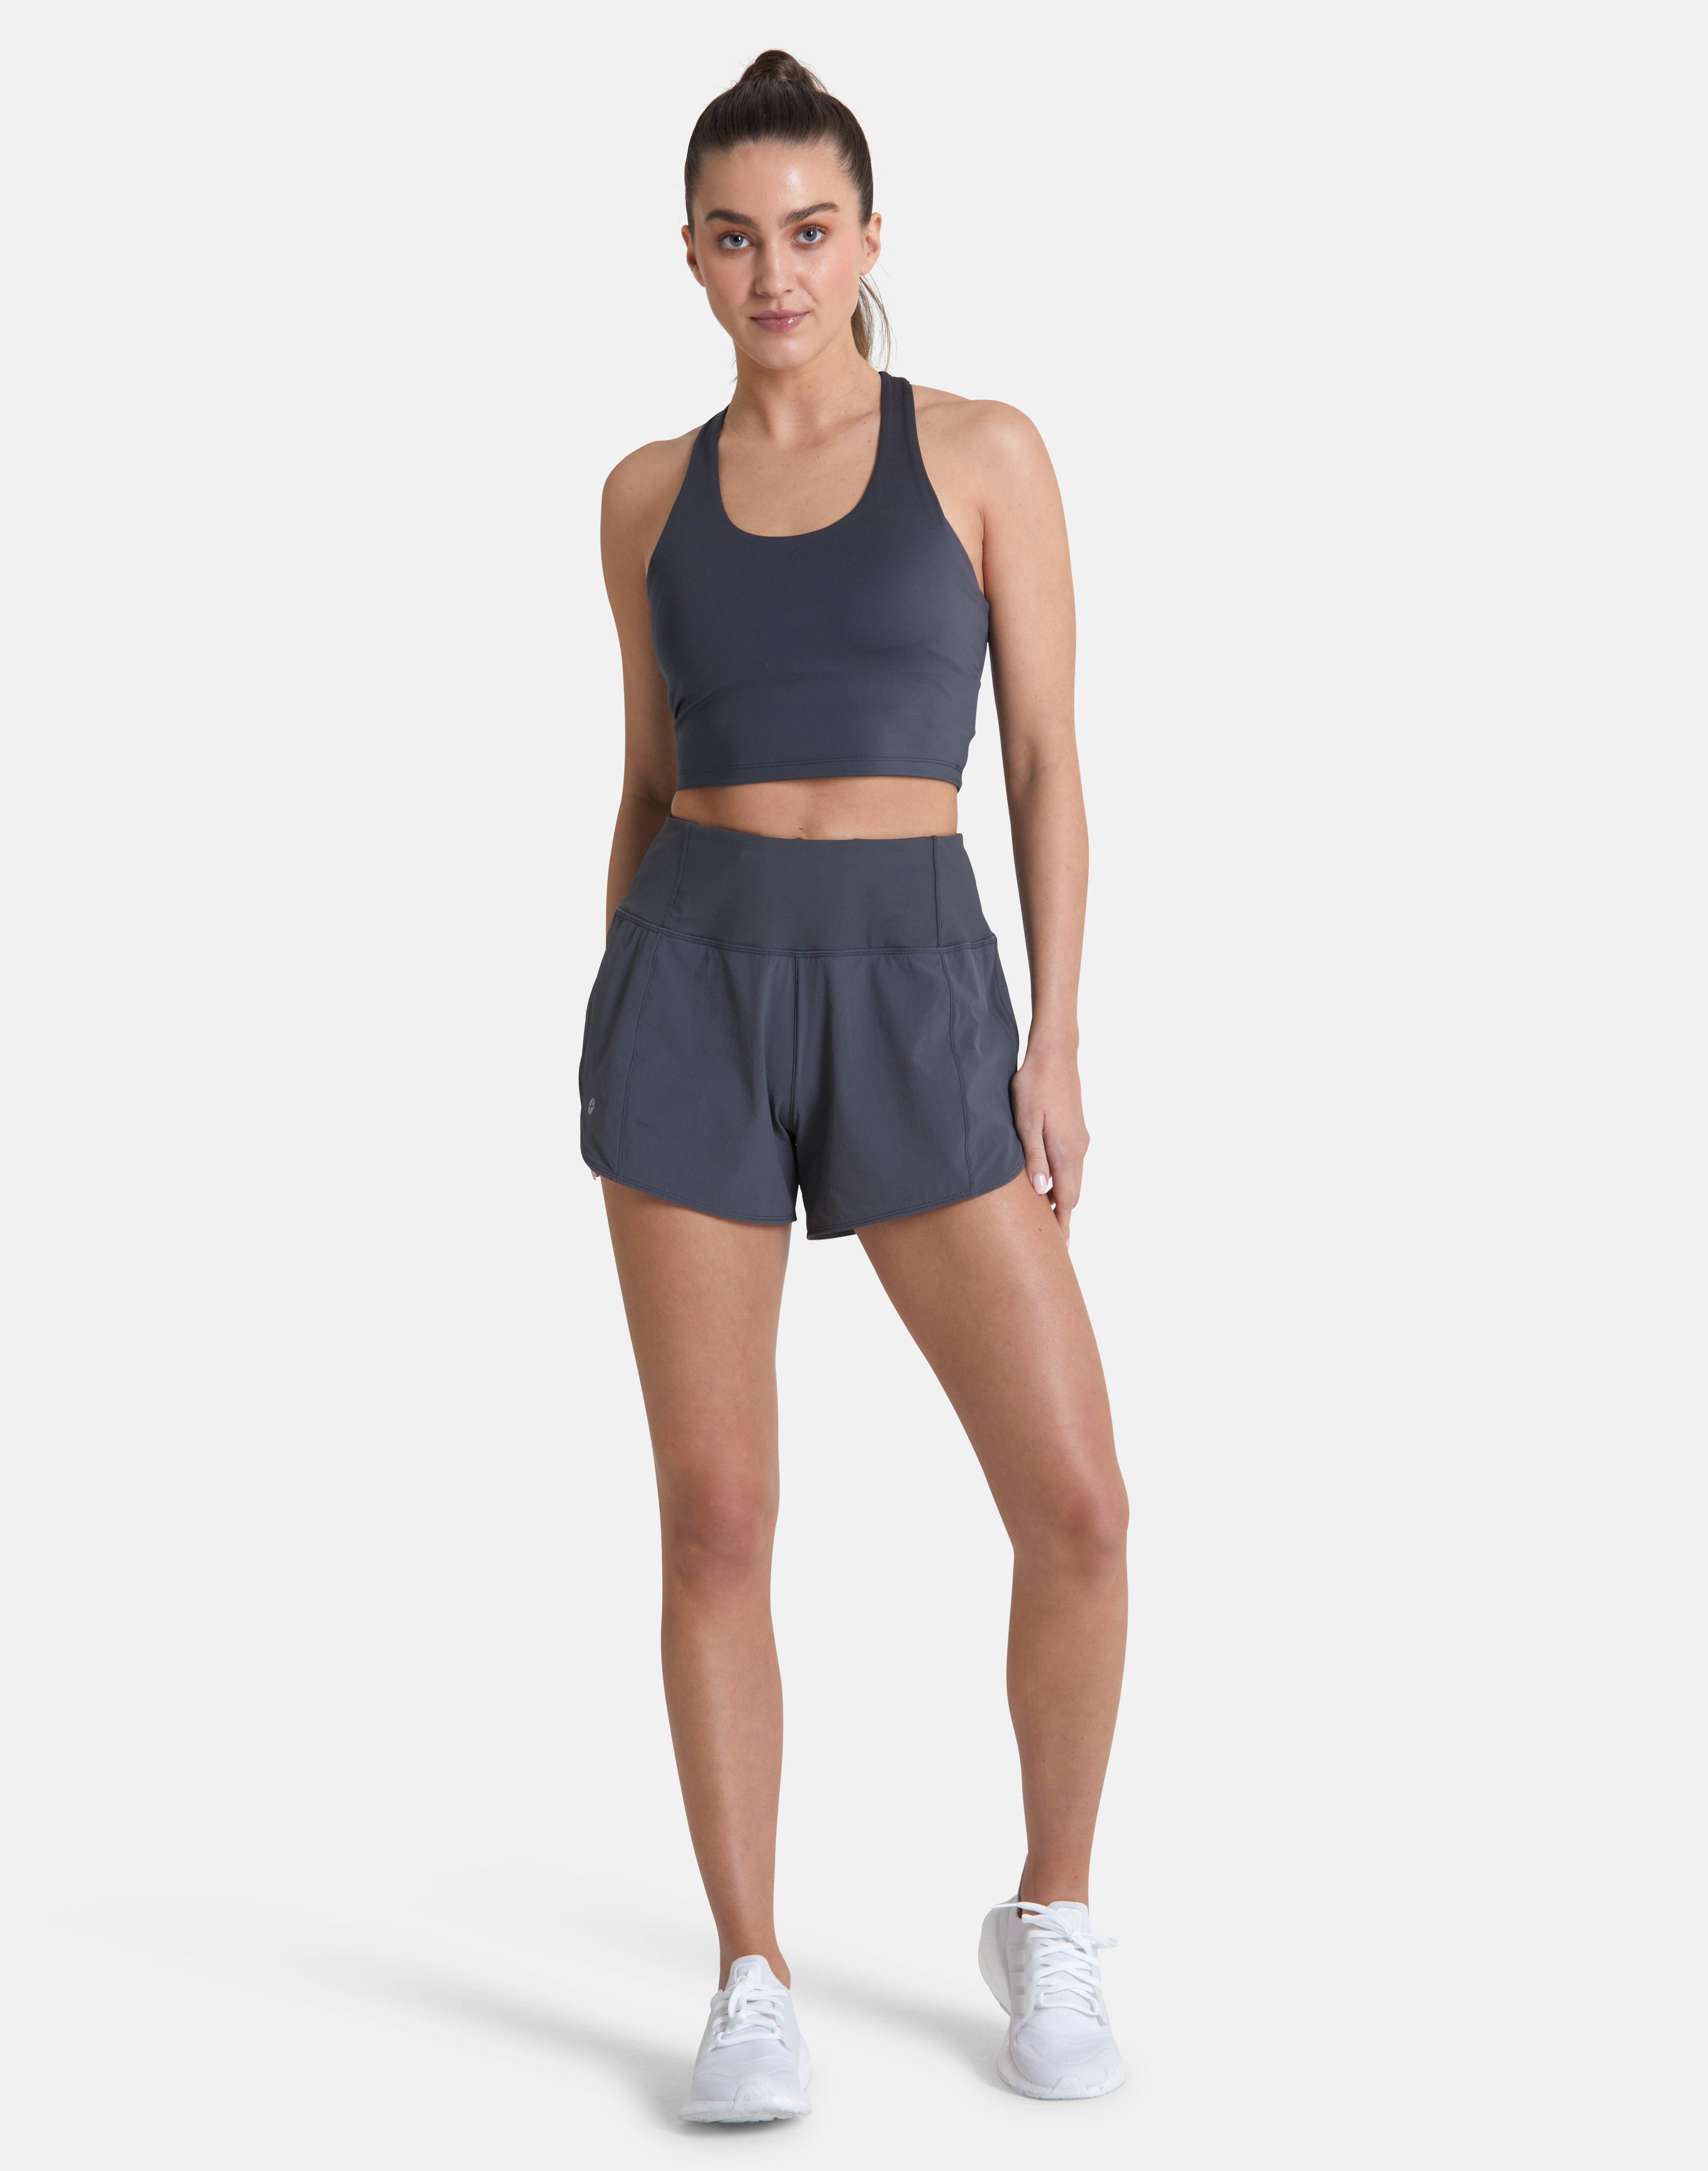 Relentless Shorts in Orbit - Shorts - Windsorbauders IE